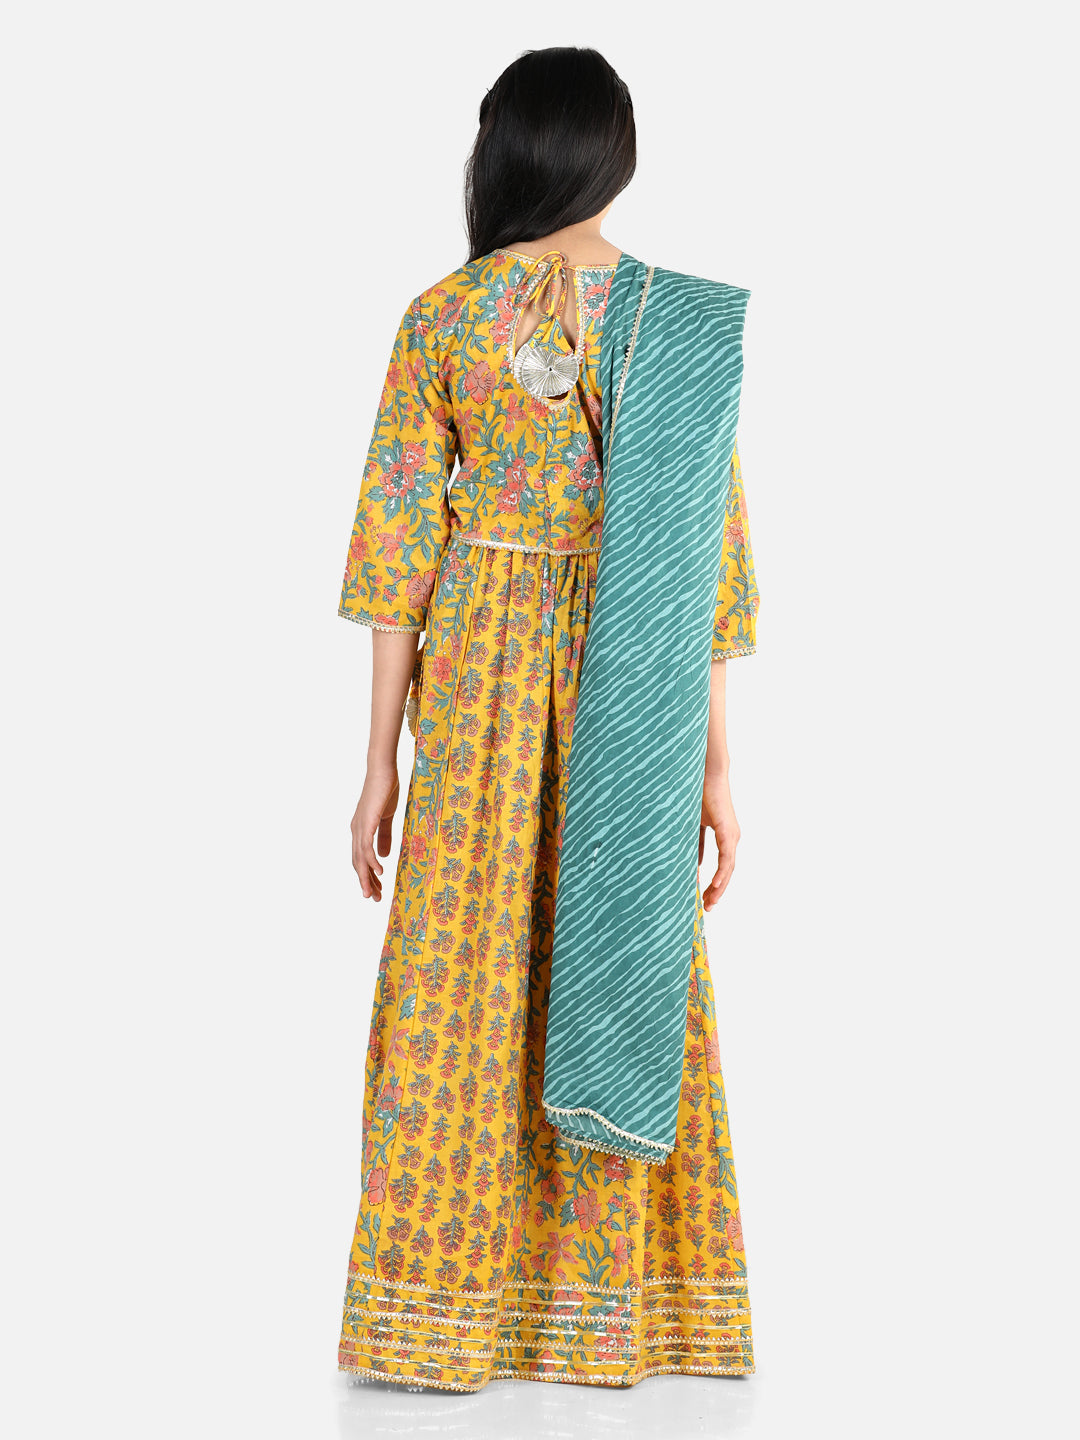 Pure Cotton Printed Lehenga Choli Dupatta Set for Girls- Yellow NOZ2TOZ - Made In INDIA.